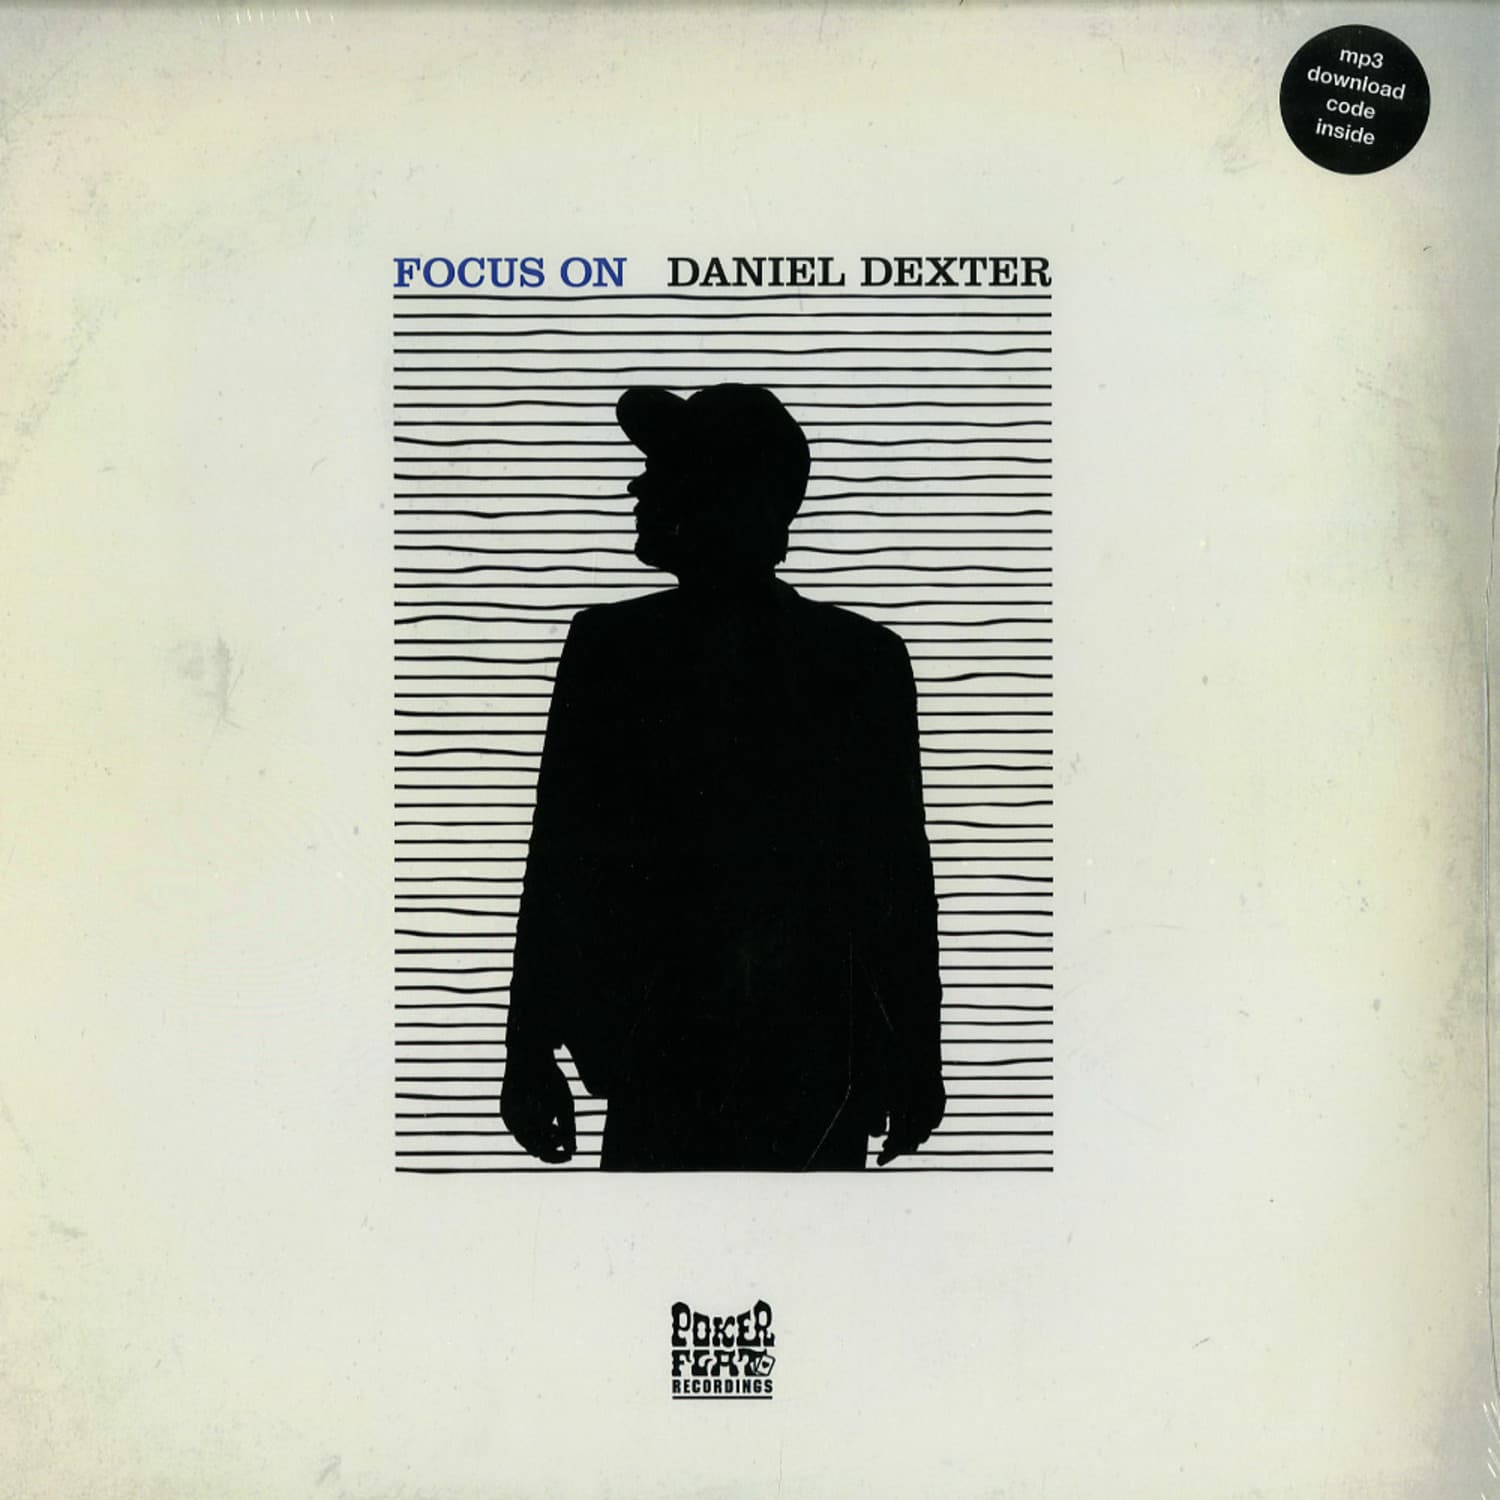 Daniel Dexter - FOCUS ON DANIEL DEXTER 